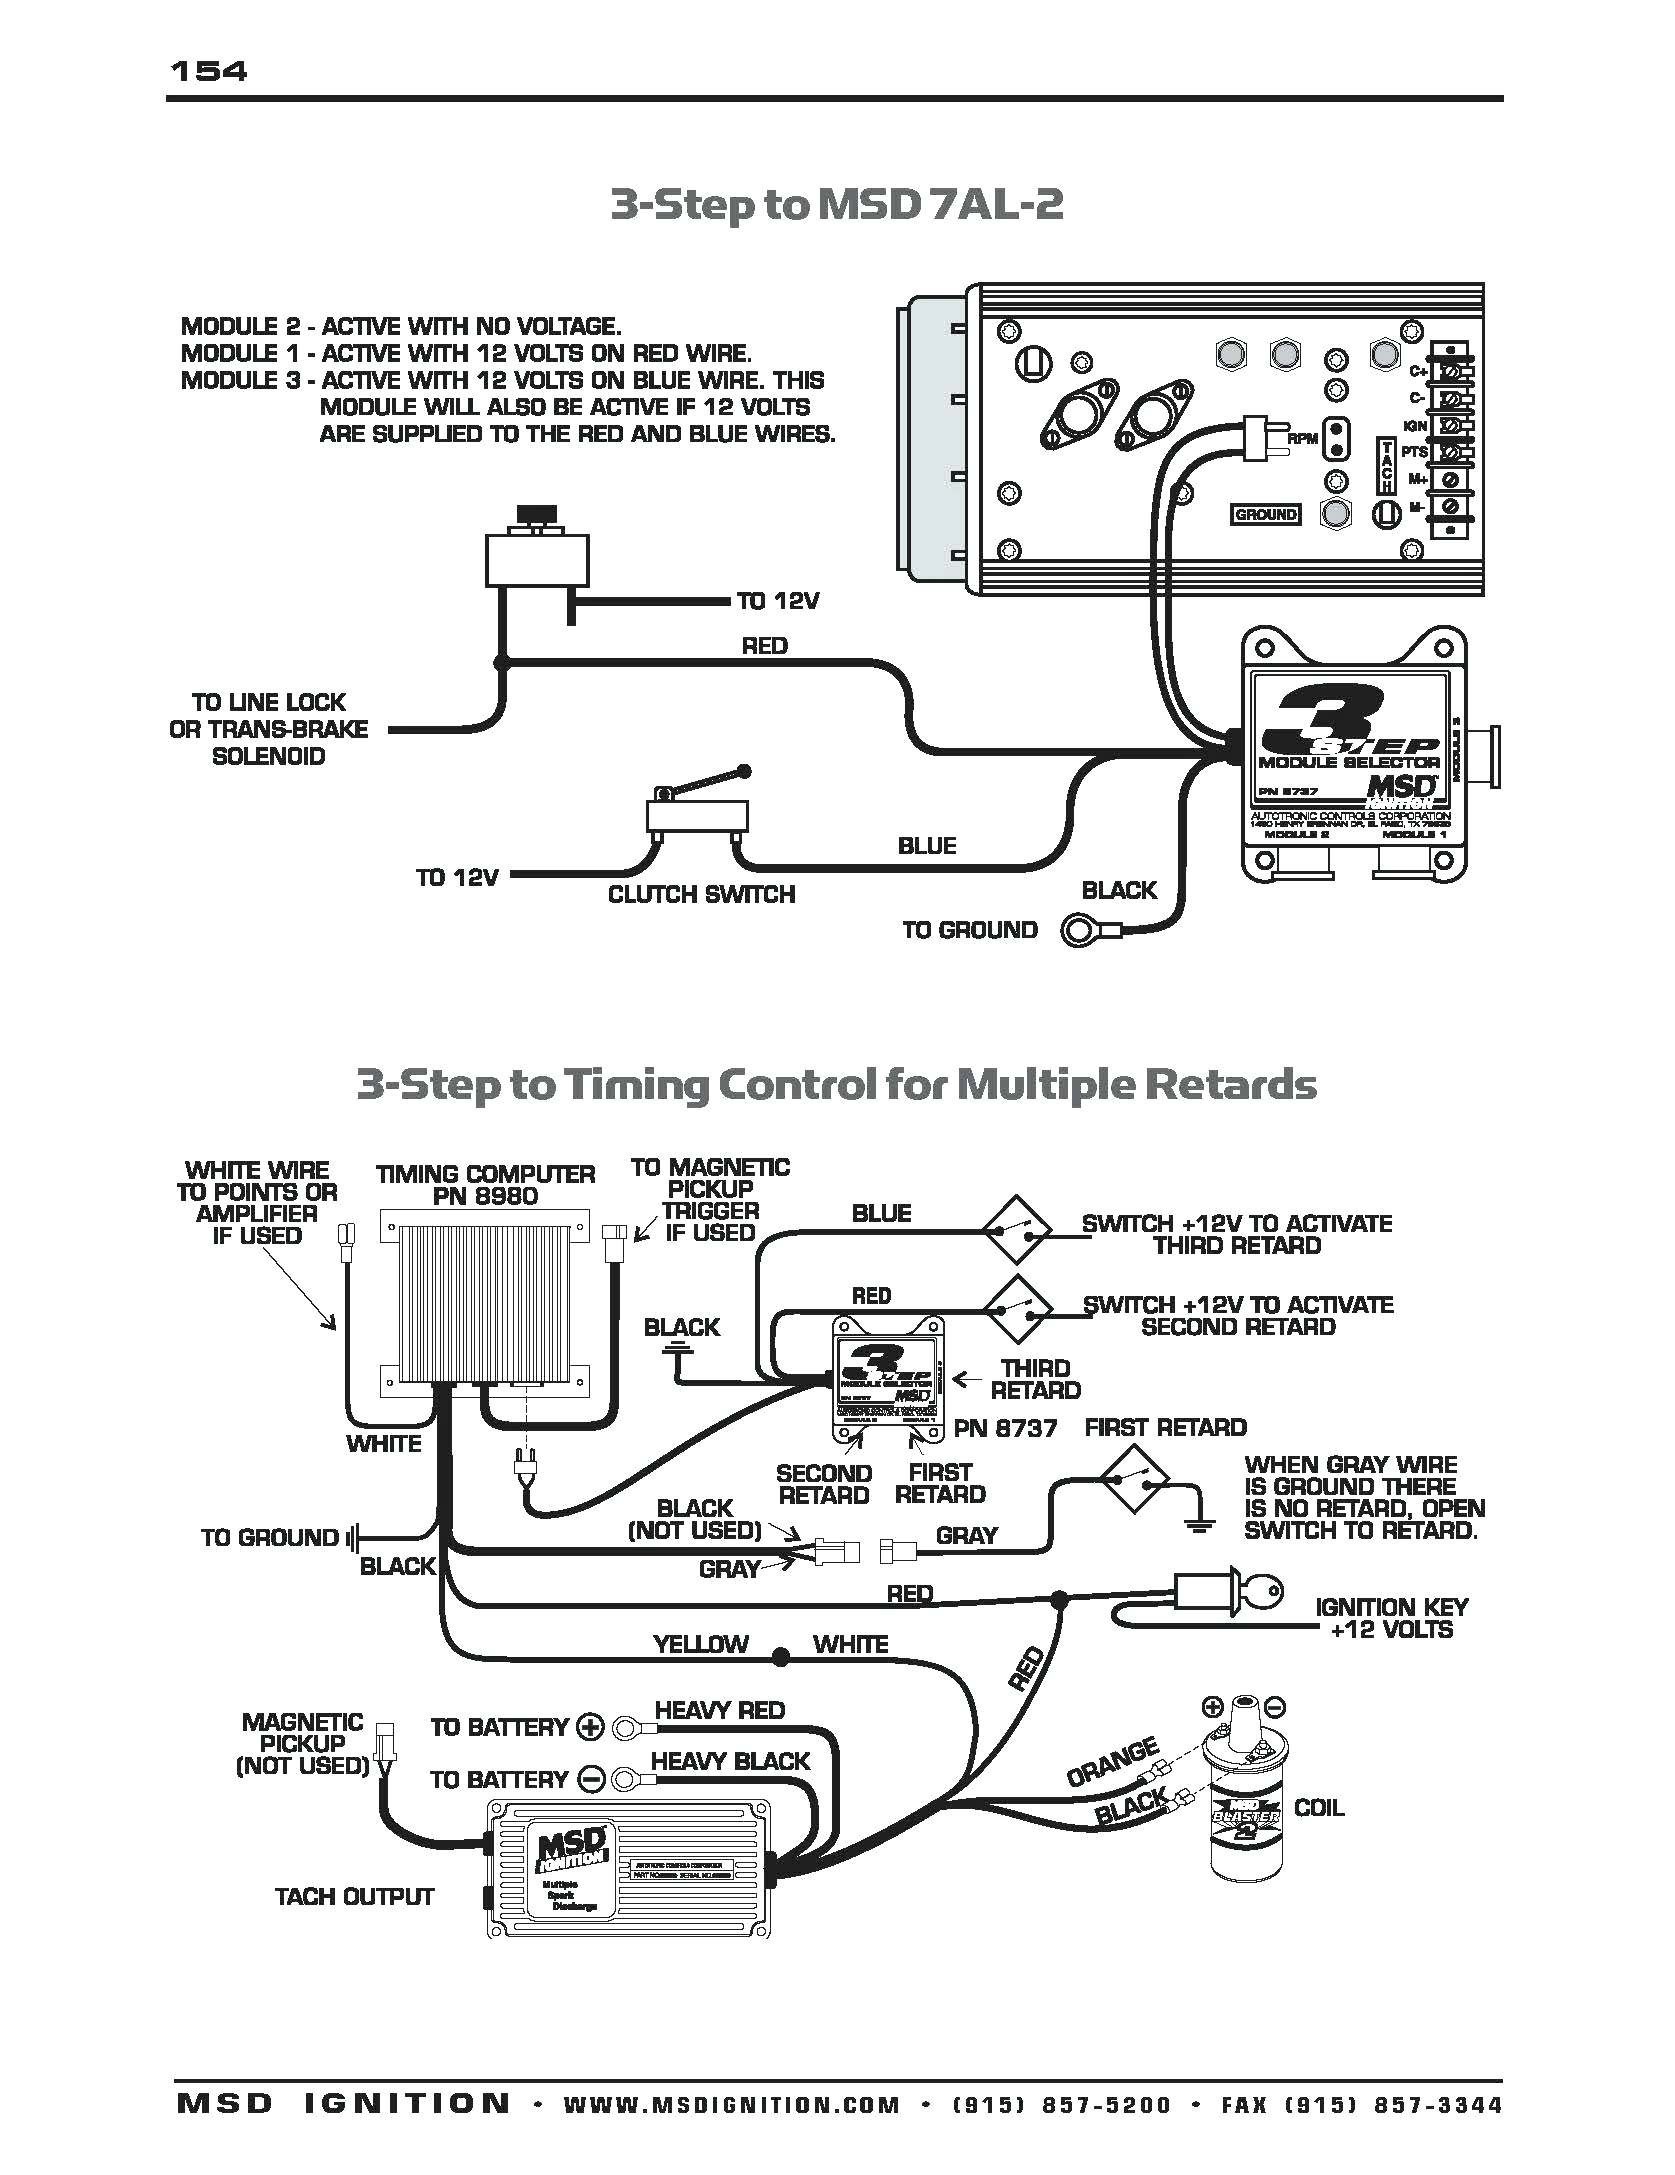 mopar starter relay wiring diagram simplified shapes chrysler wiring starter relay schematic mopar starter relay wiring